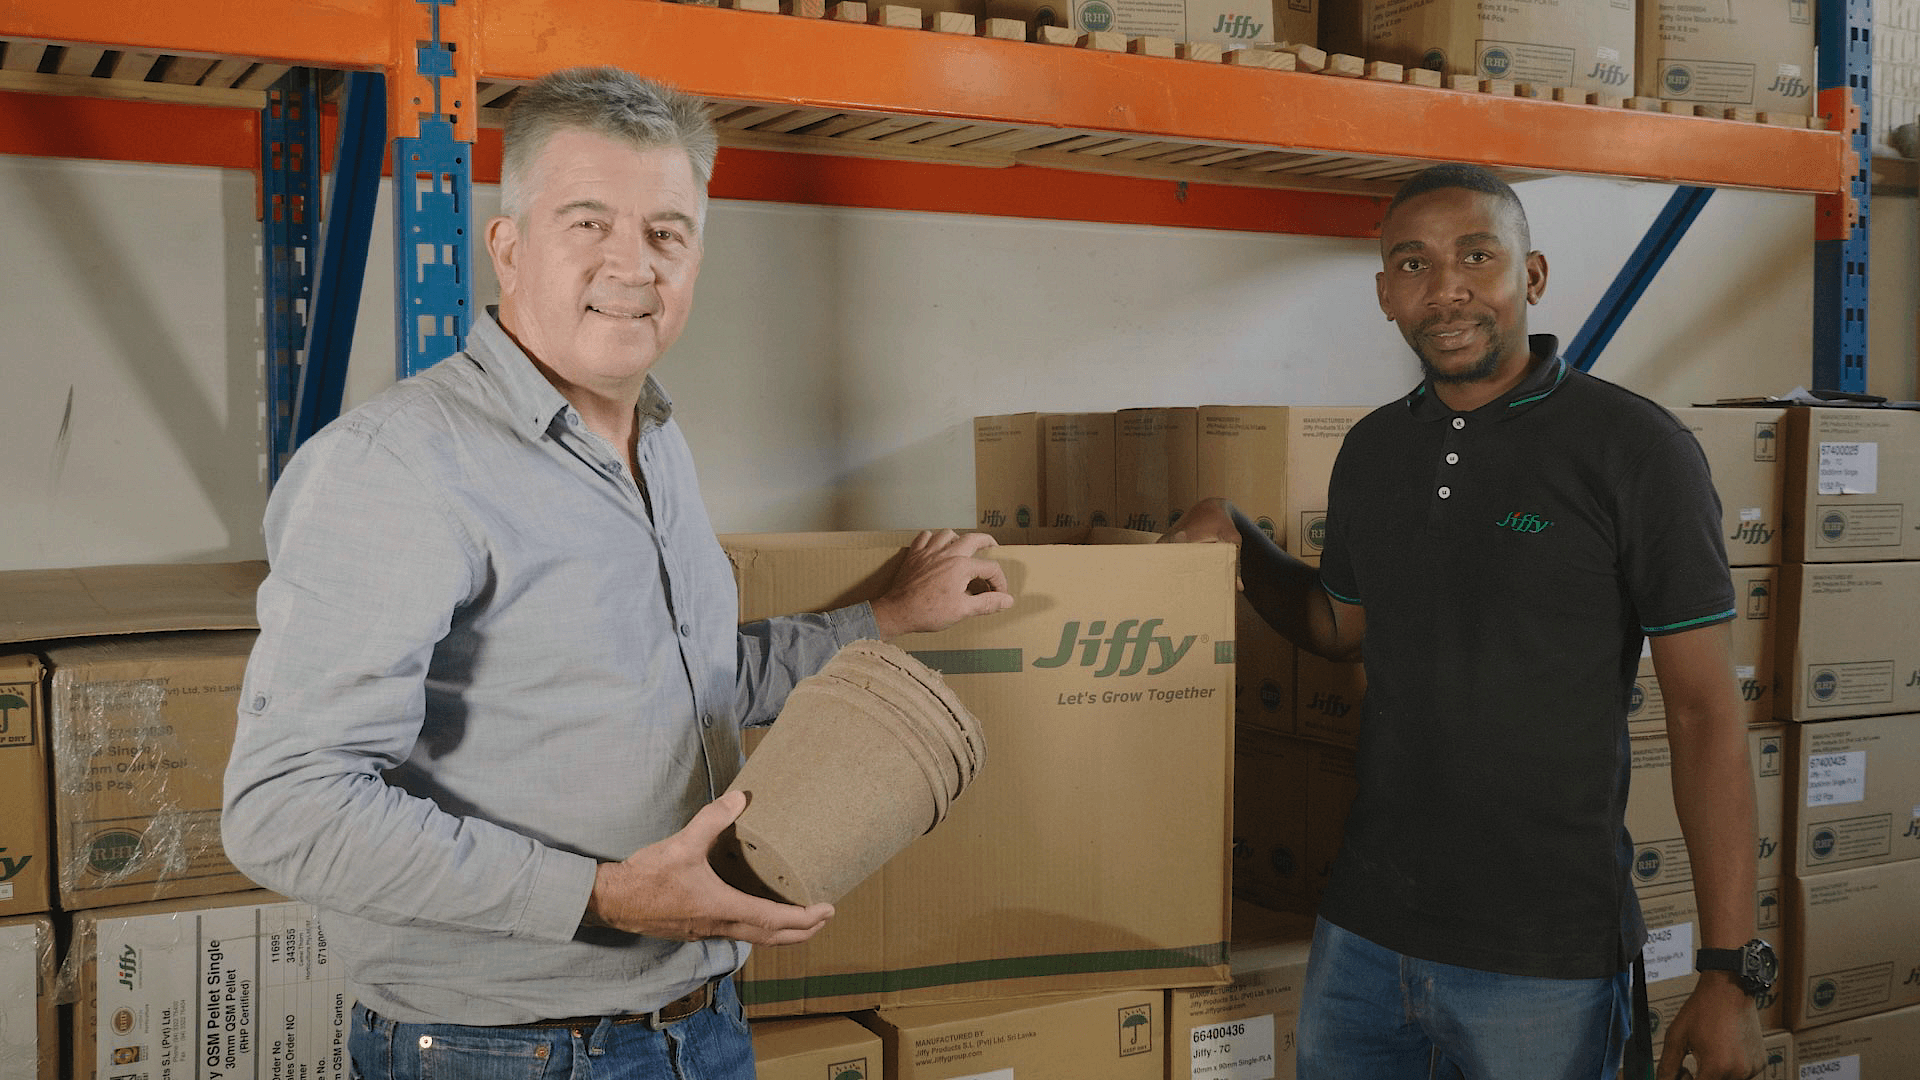 Jiffy coco growing media is bestseller in South Africa